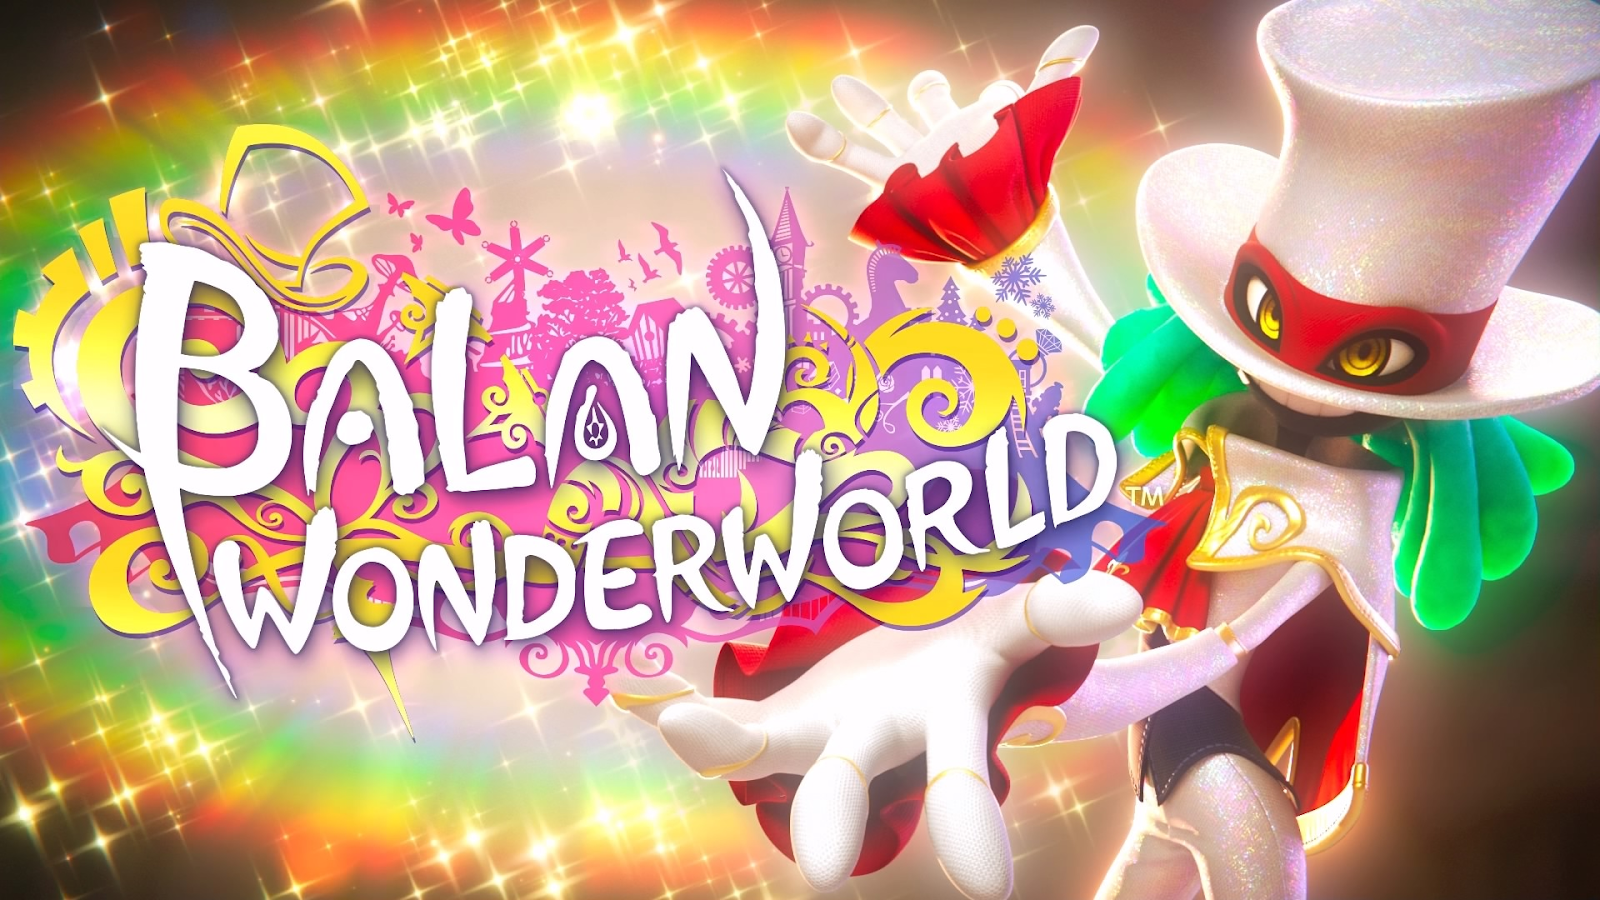 4. Balan Wonderworld